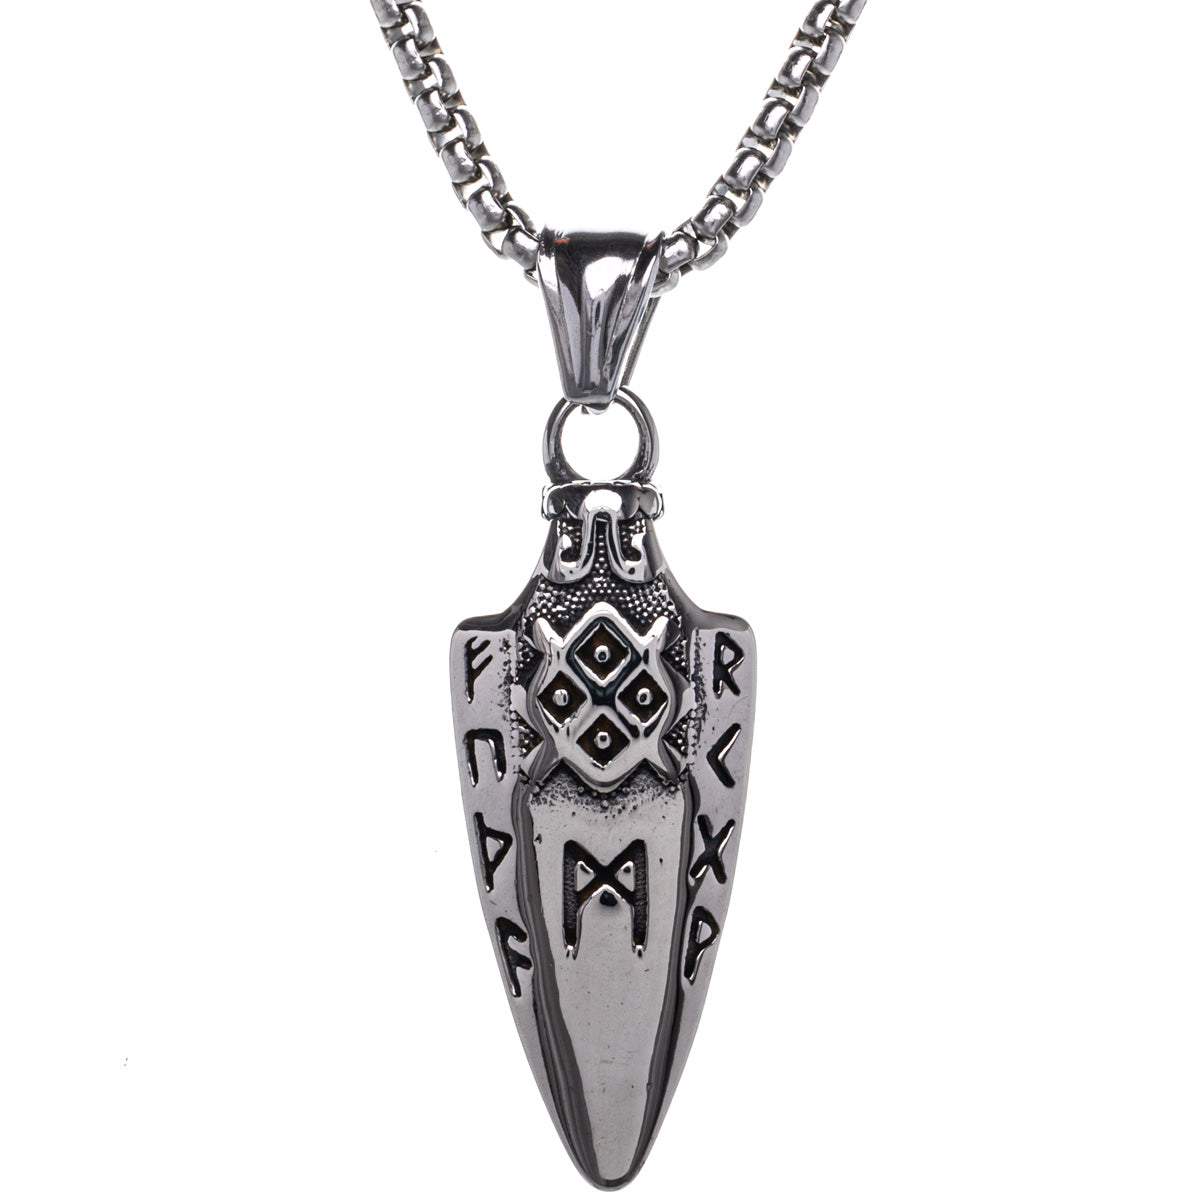 Gungnir pendant pendant necklace (Steel 316L)